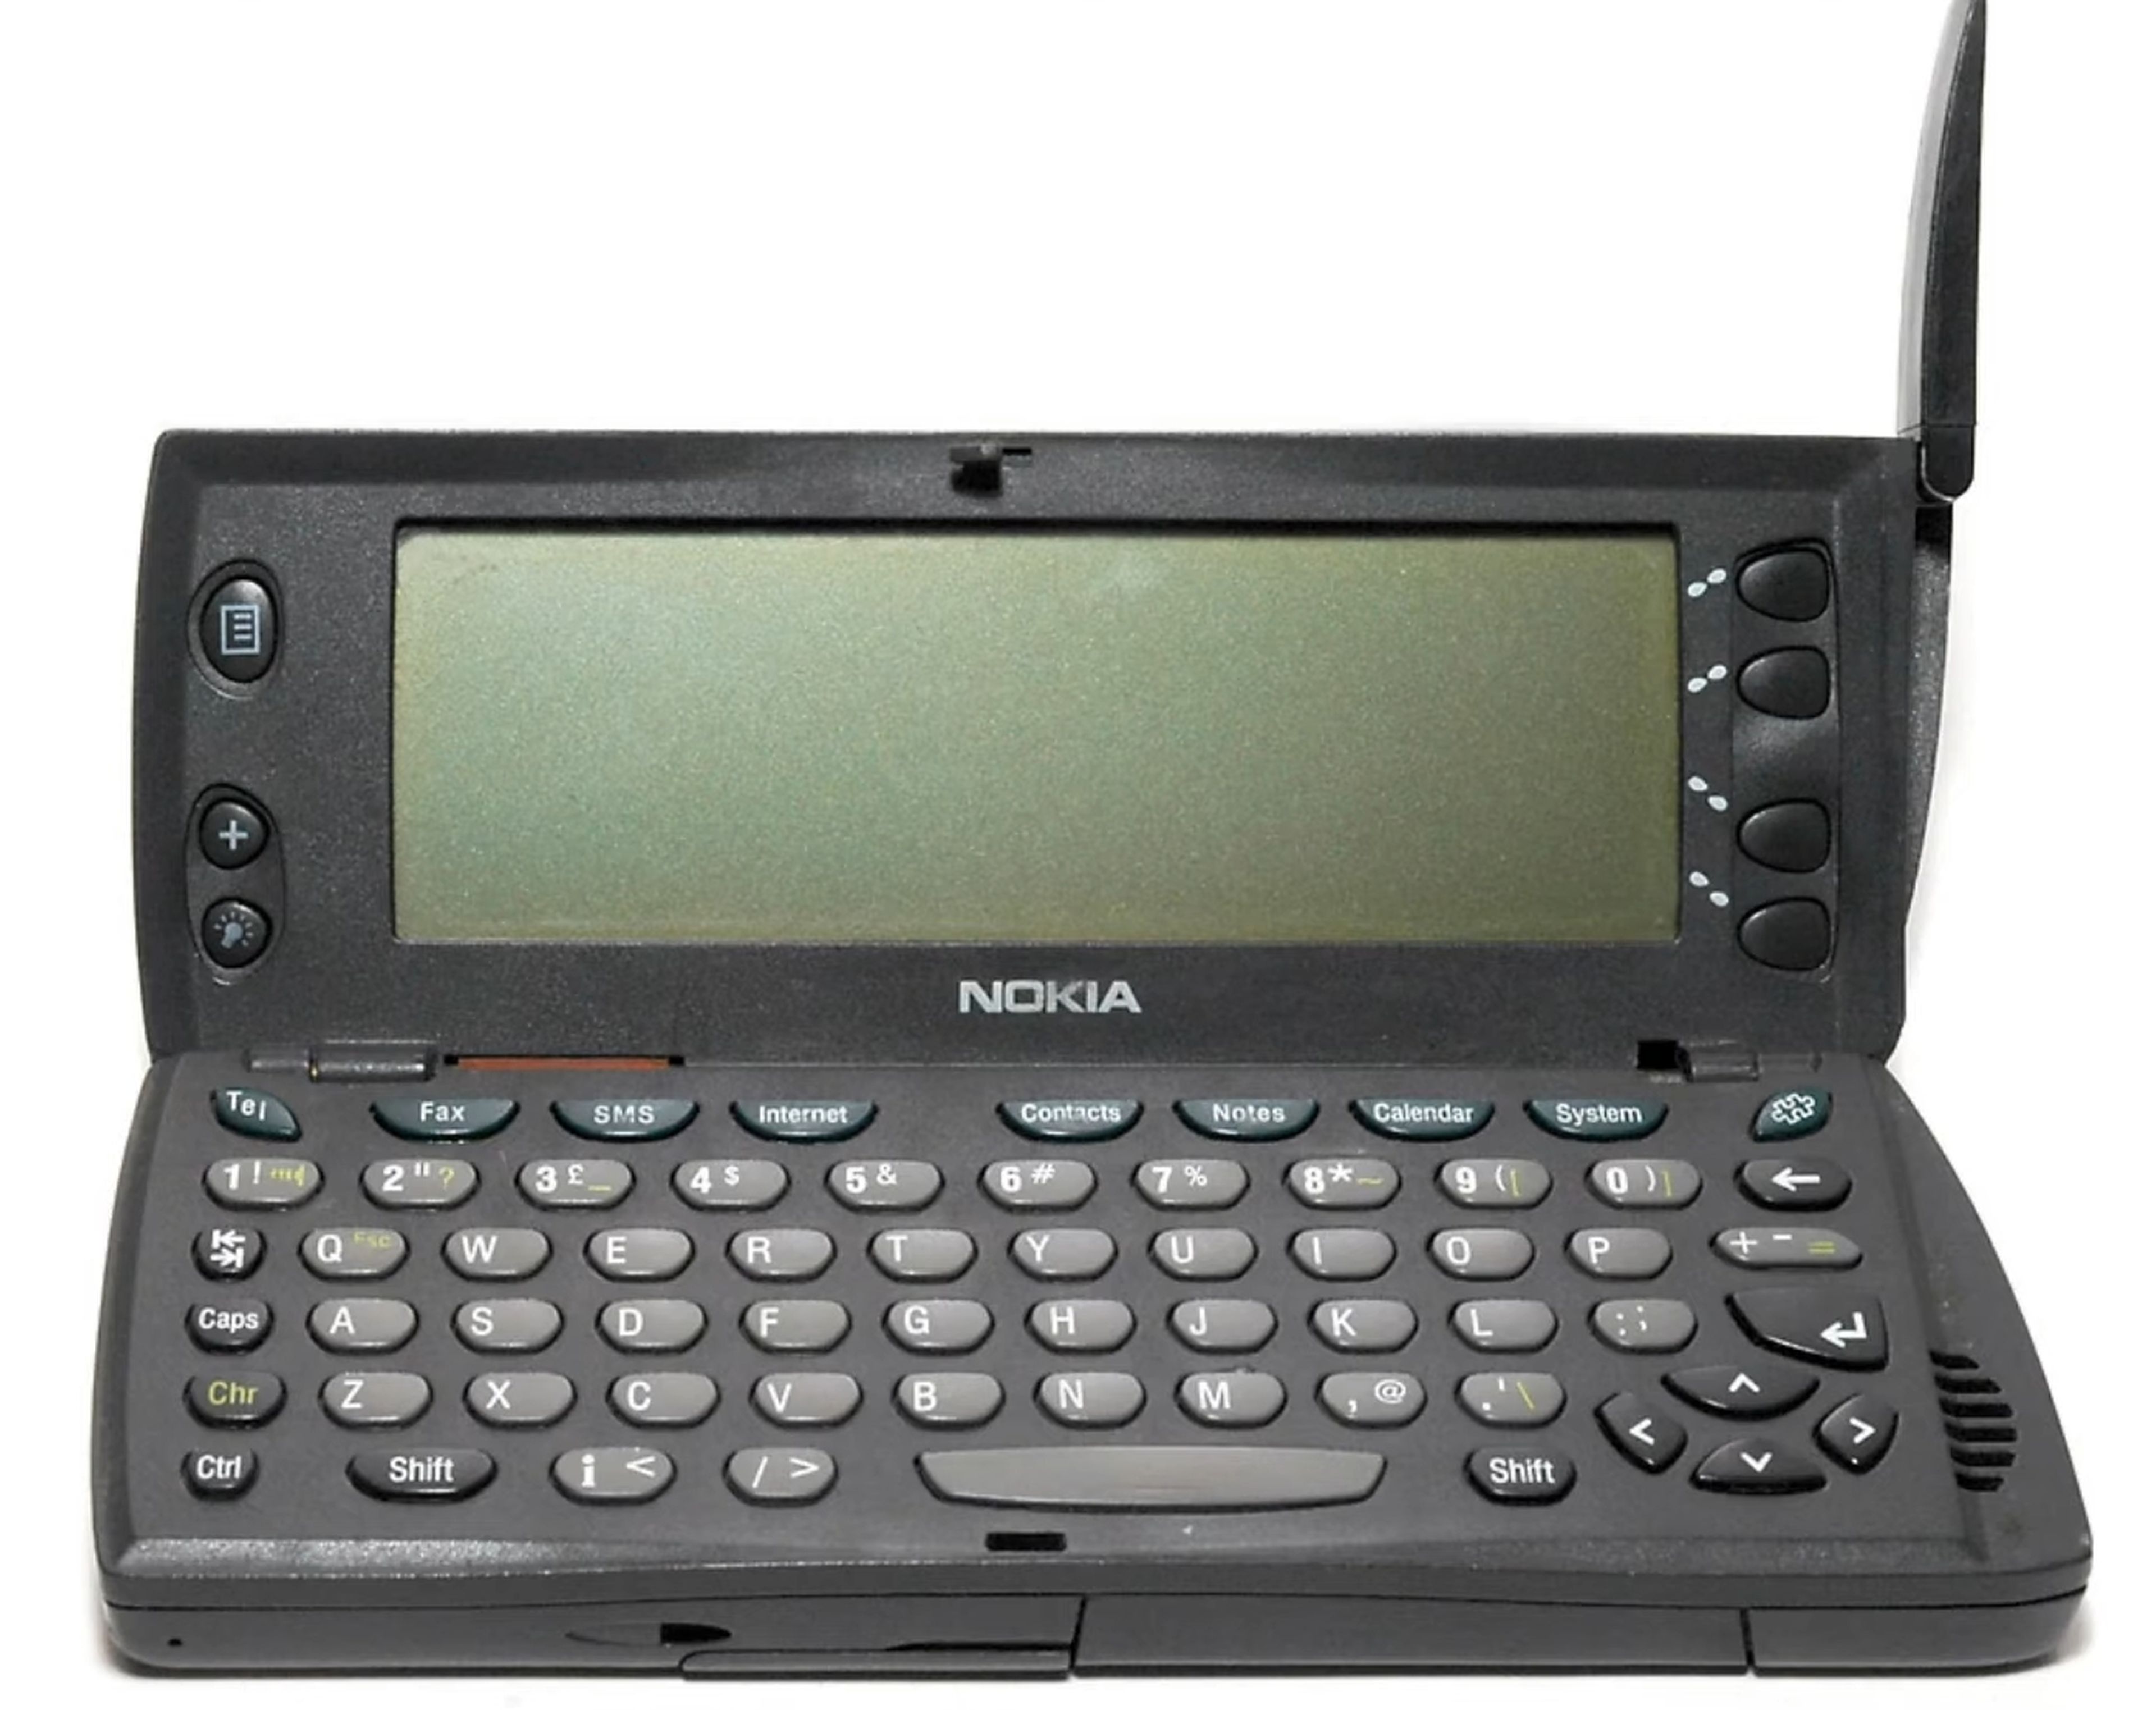 Nokia 5110 Communicator